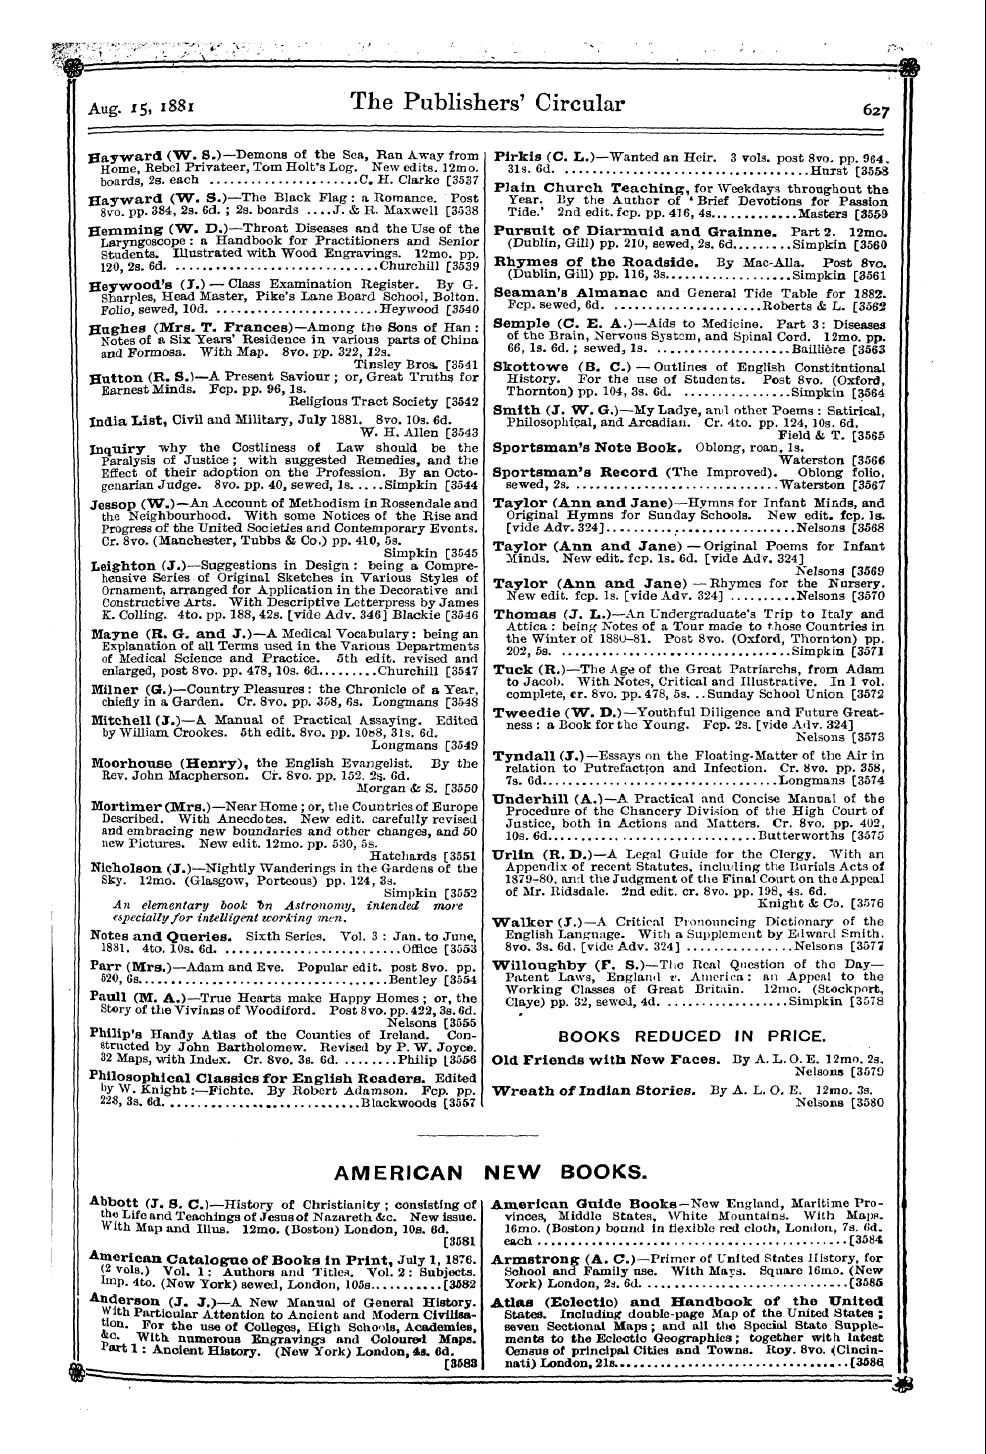 Publishers’ Circular (1880-1890): jS F Y, 1st edition: 11